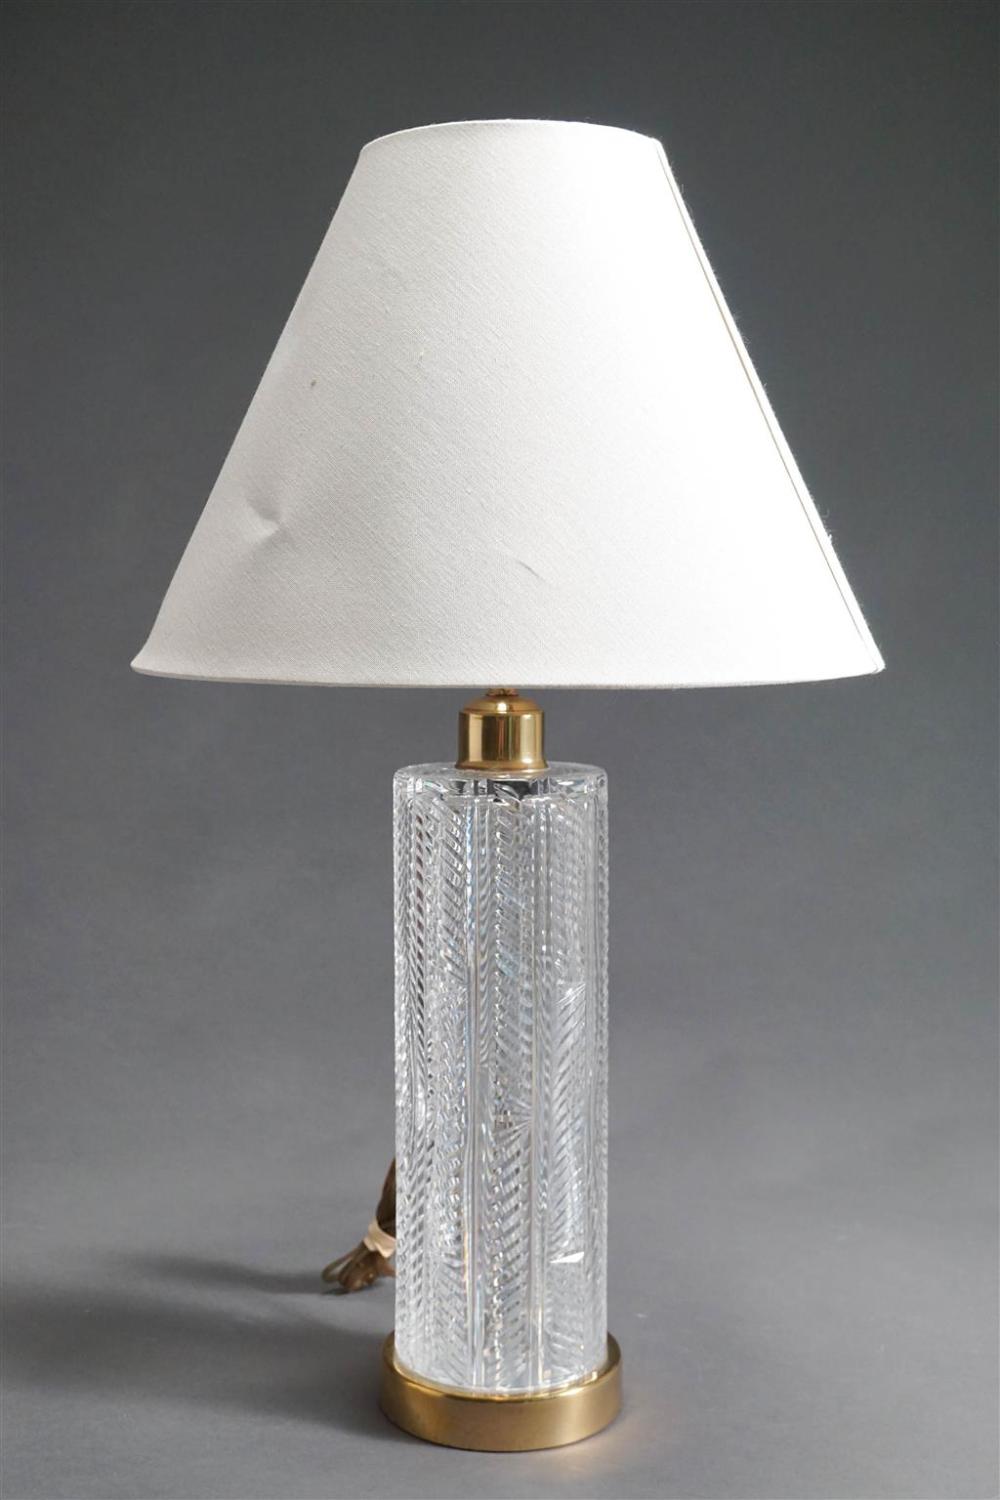 CUT GLASS TABLE LAMP, H: 25-1/2